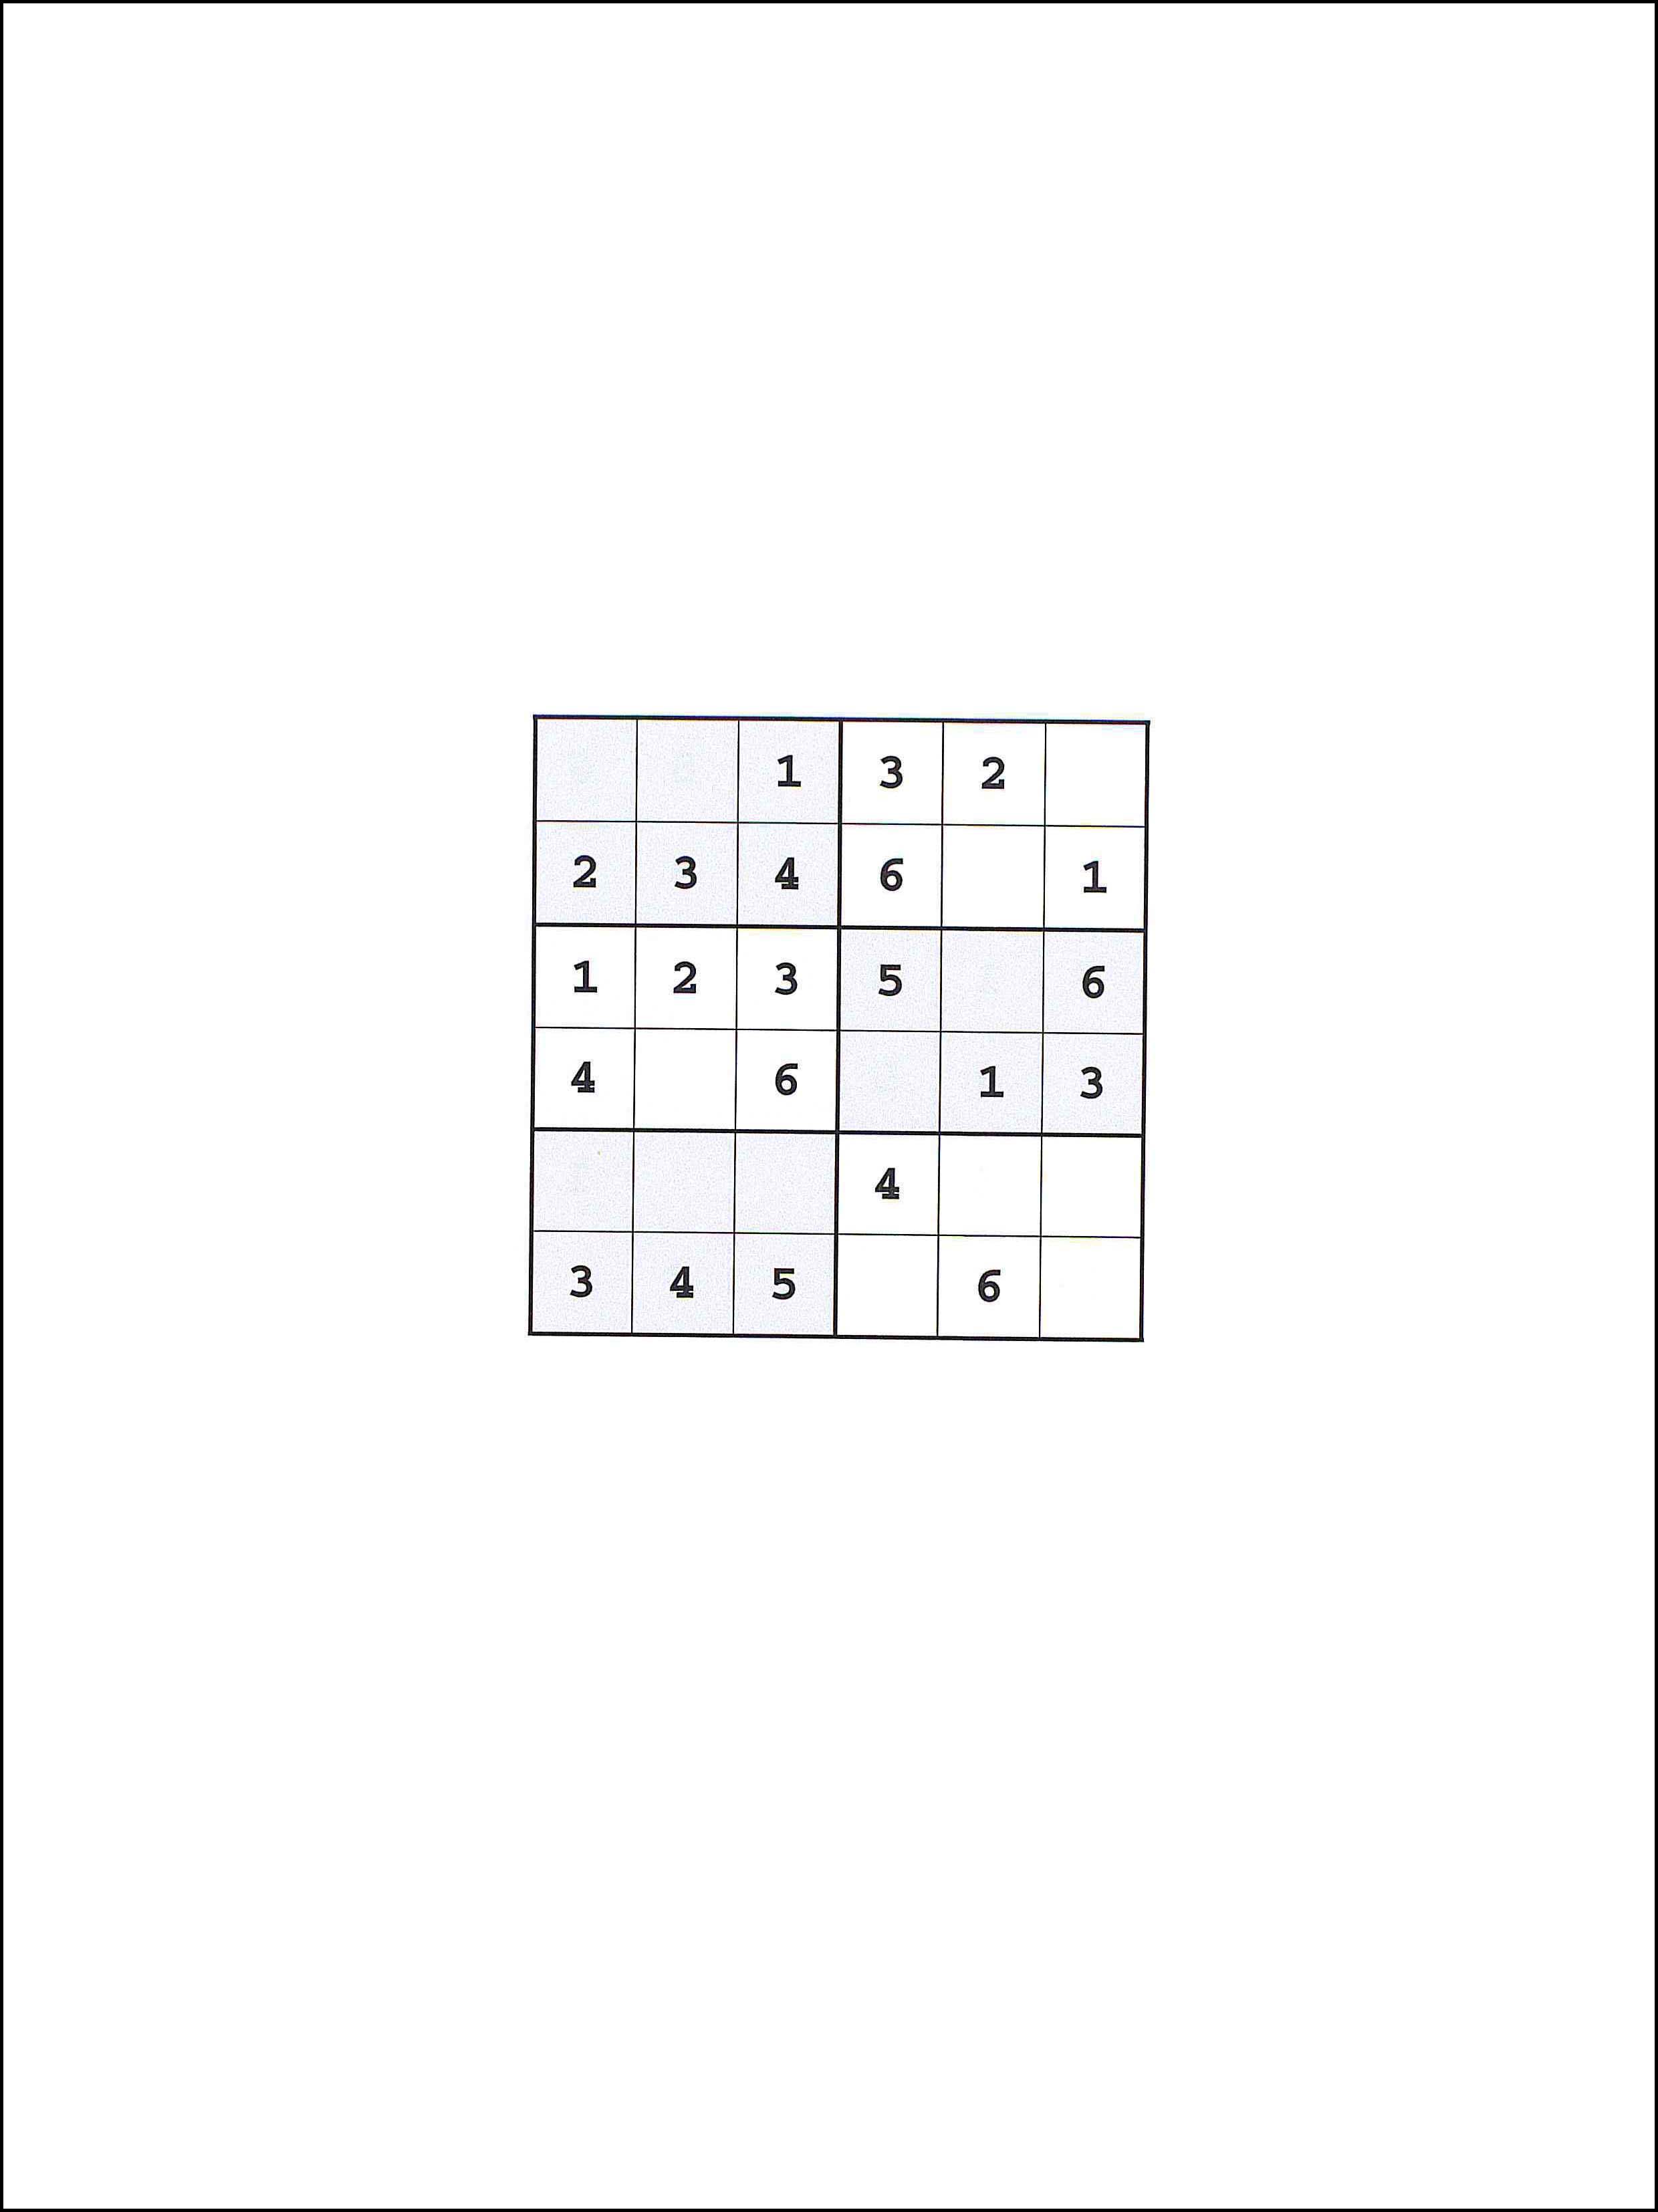 6x6 सुडोकु 3